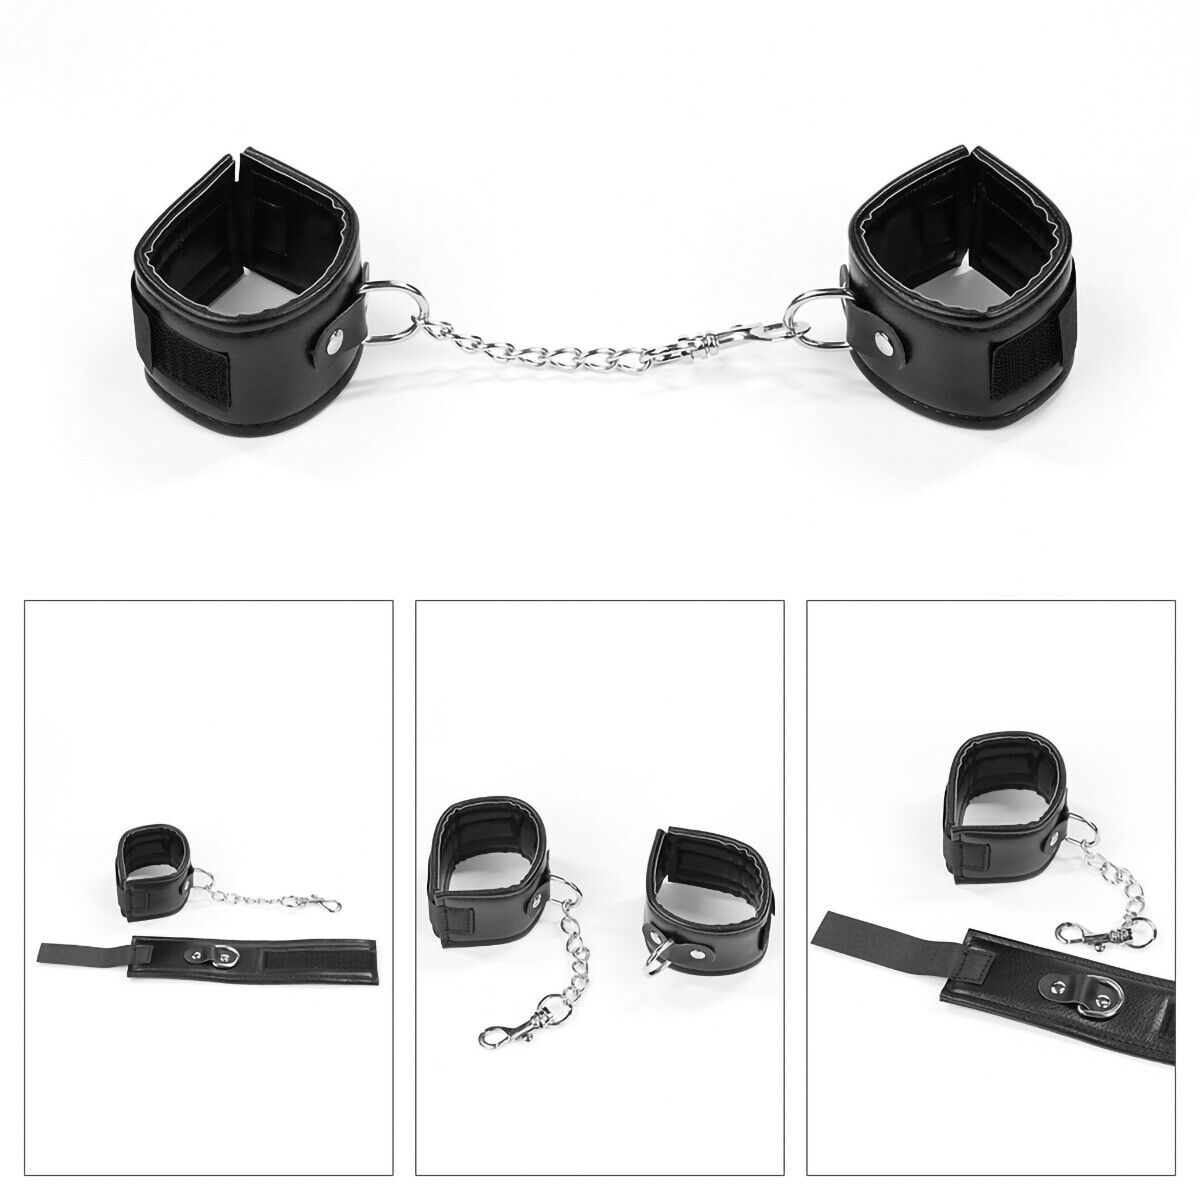 Beginner's Deluxe SM Fetish Bondage Kit Blindfold Mask Flogger Handcuffs Sex Toy